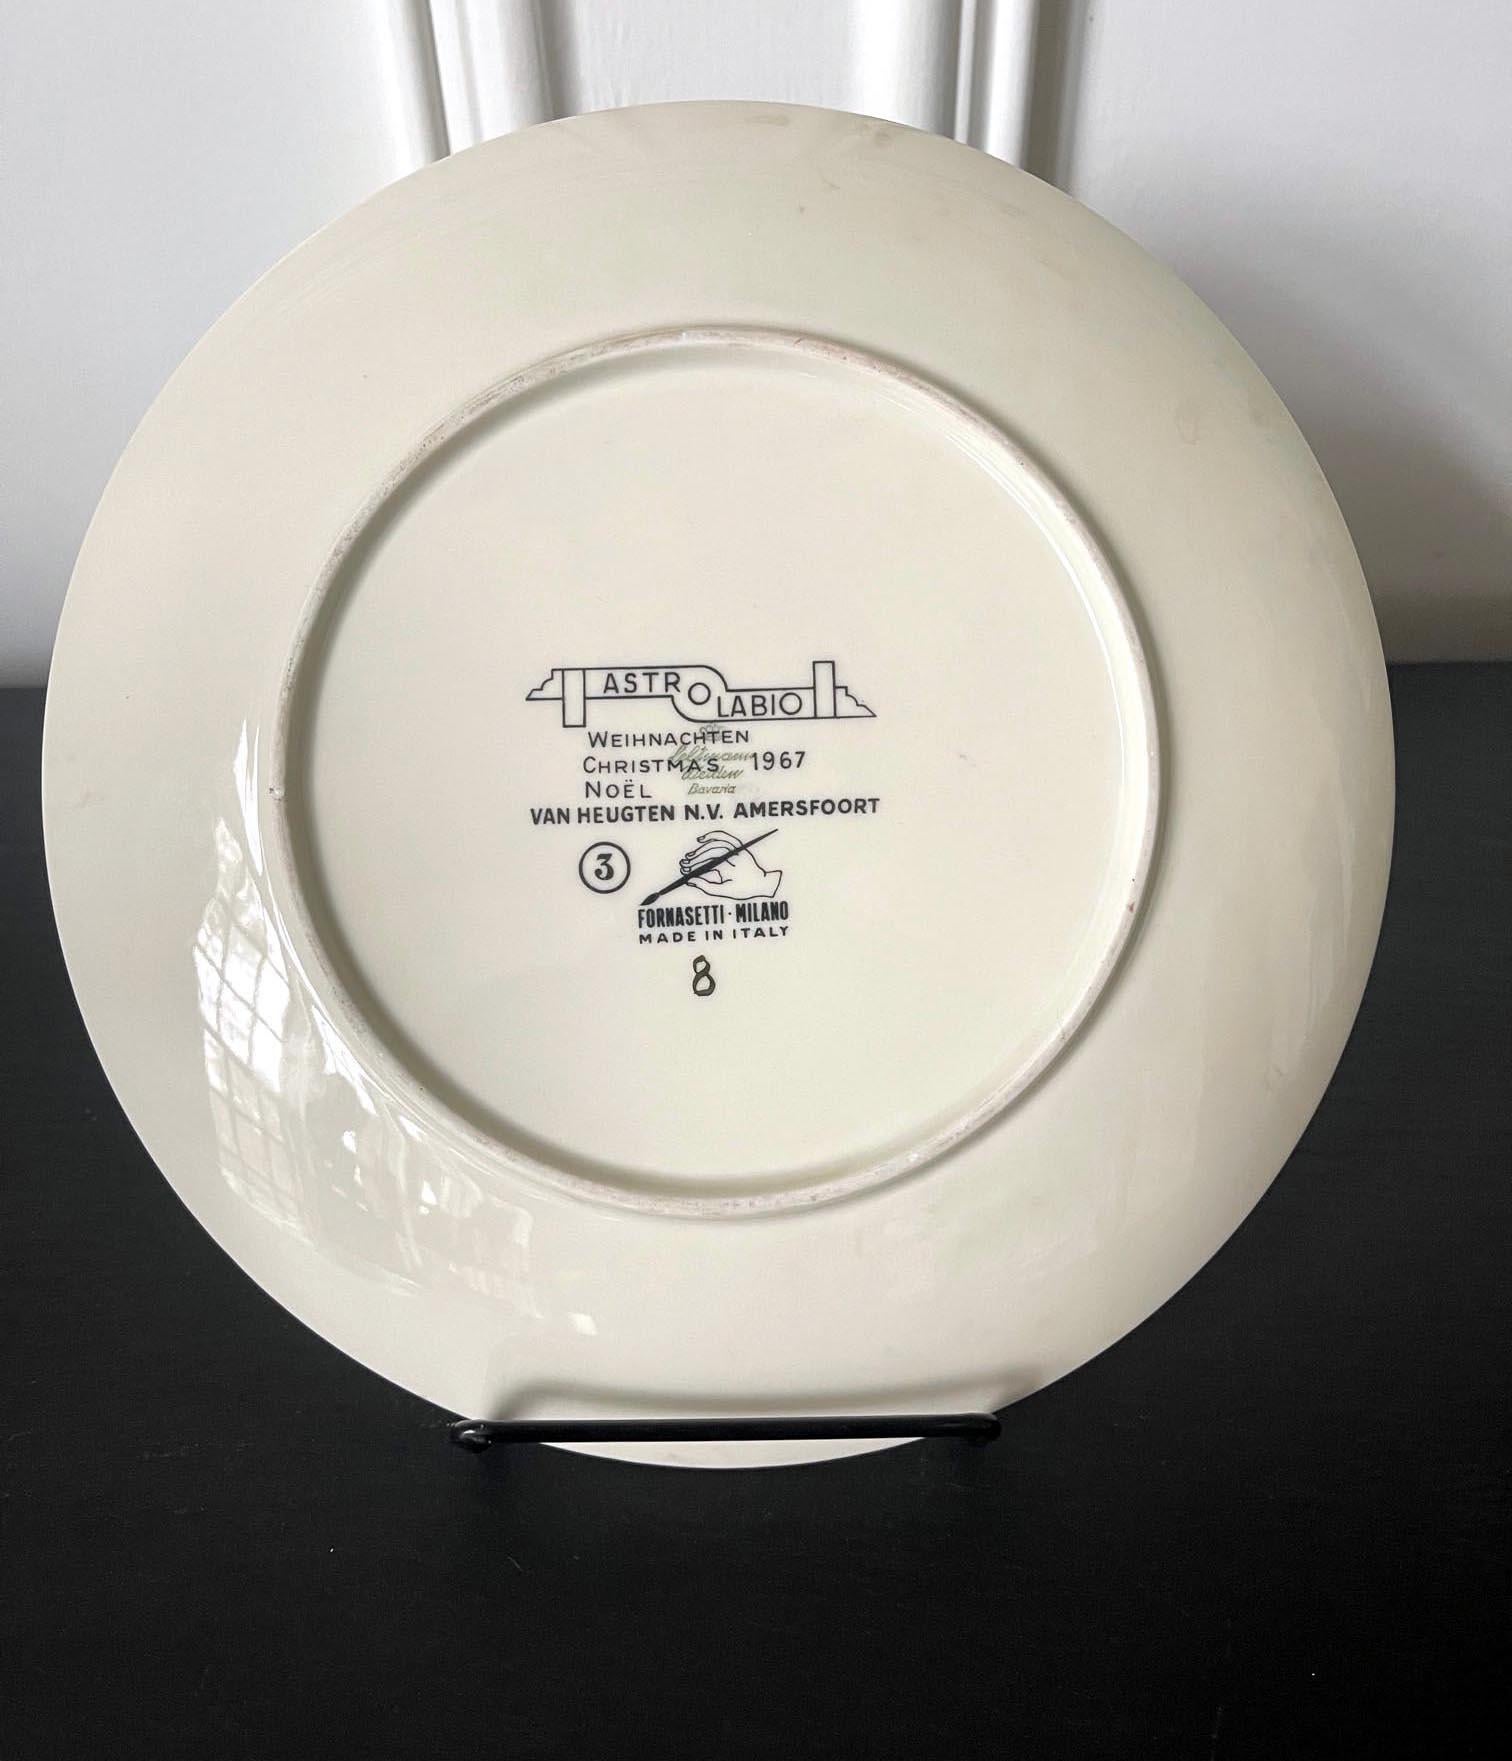 Piero Fornasetti Astrolabe Porcelain Plate, 1967 For Sale 2